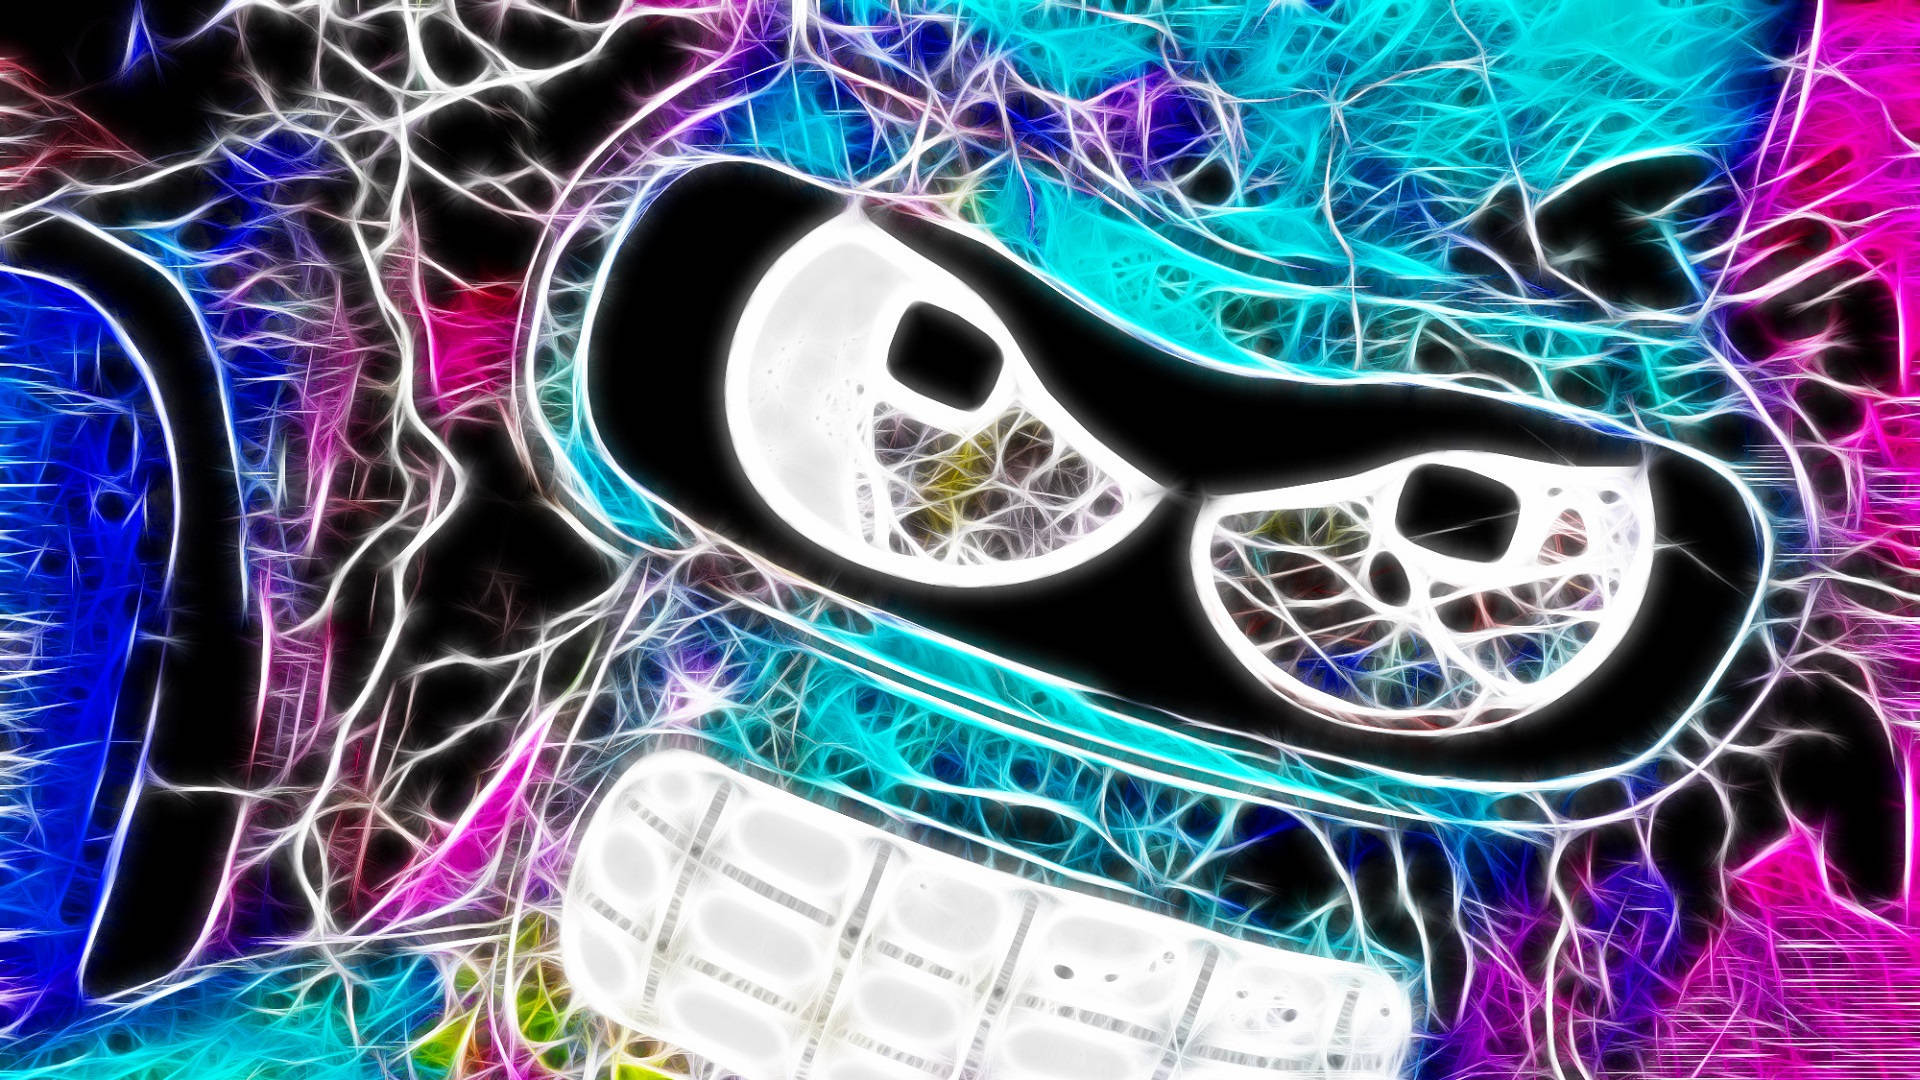 Abstract Art Of Bender Futurama Background